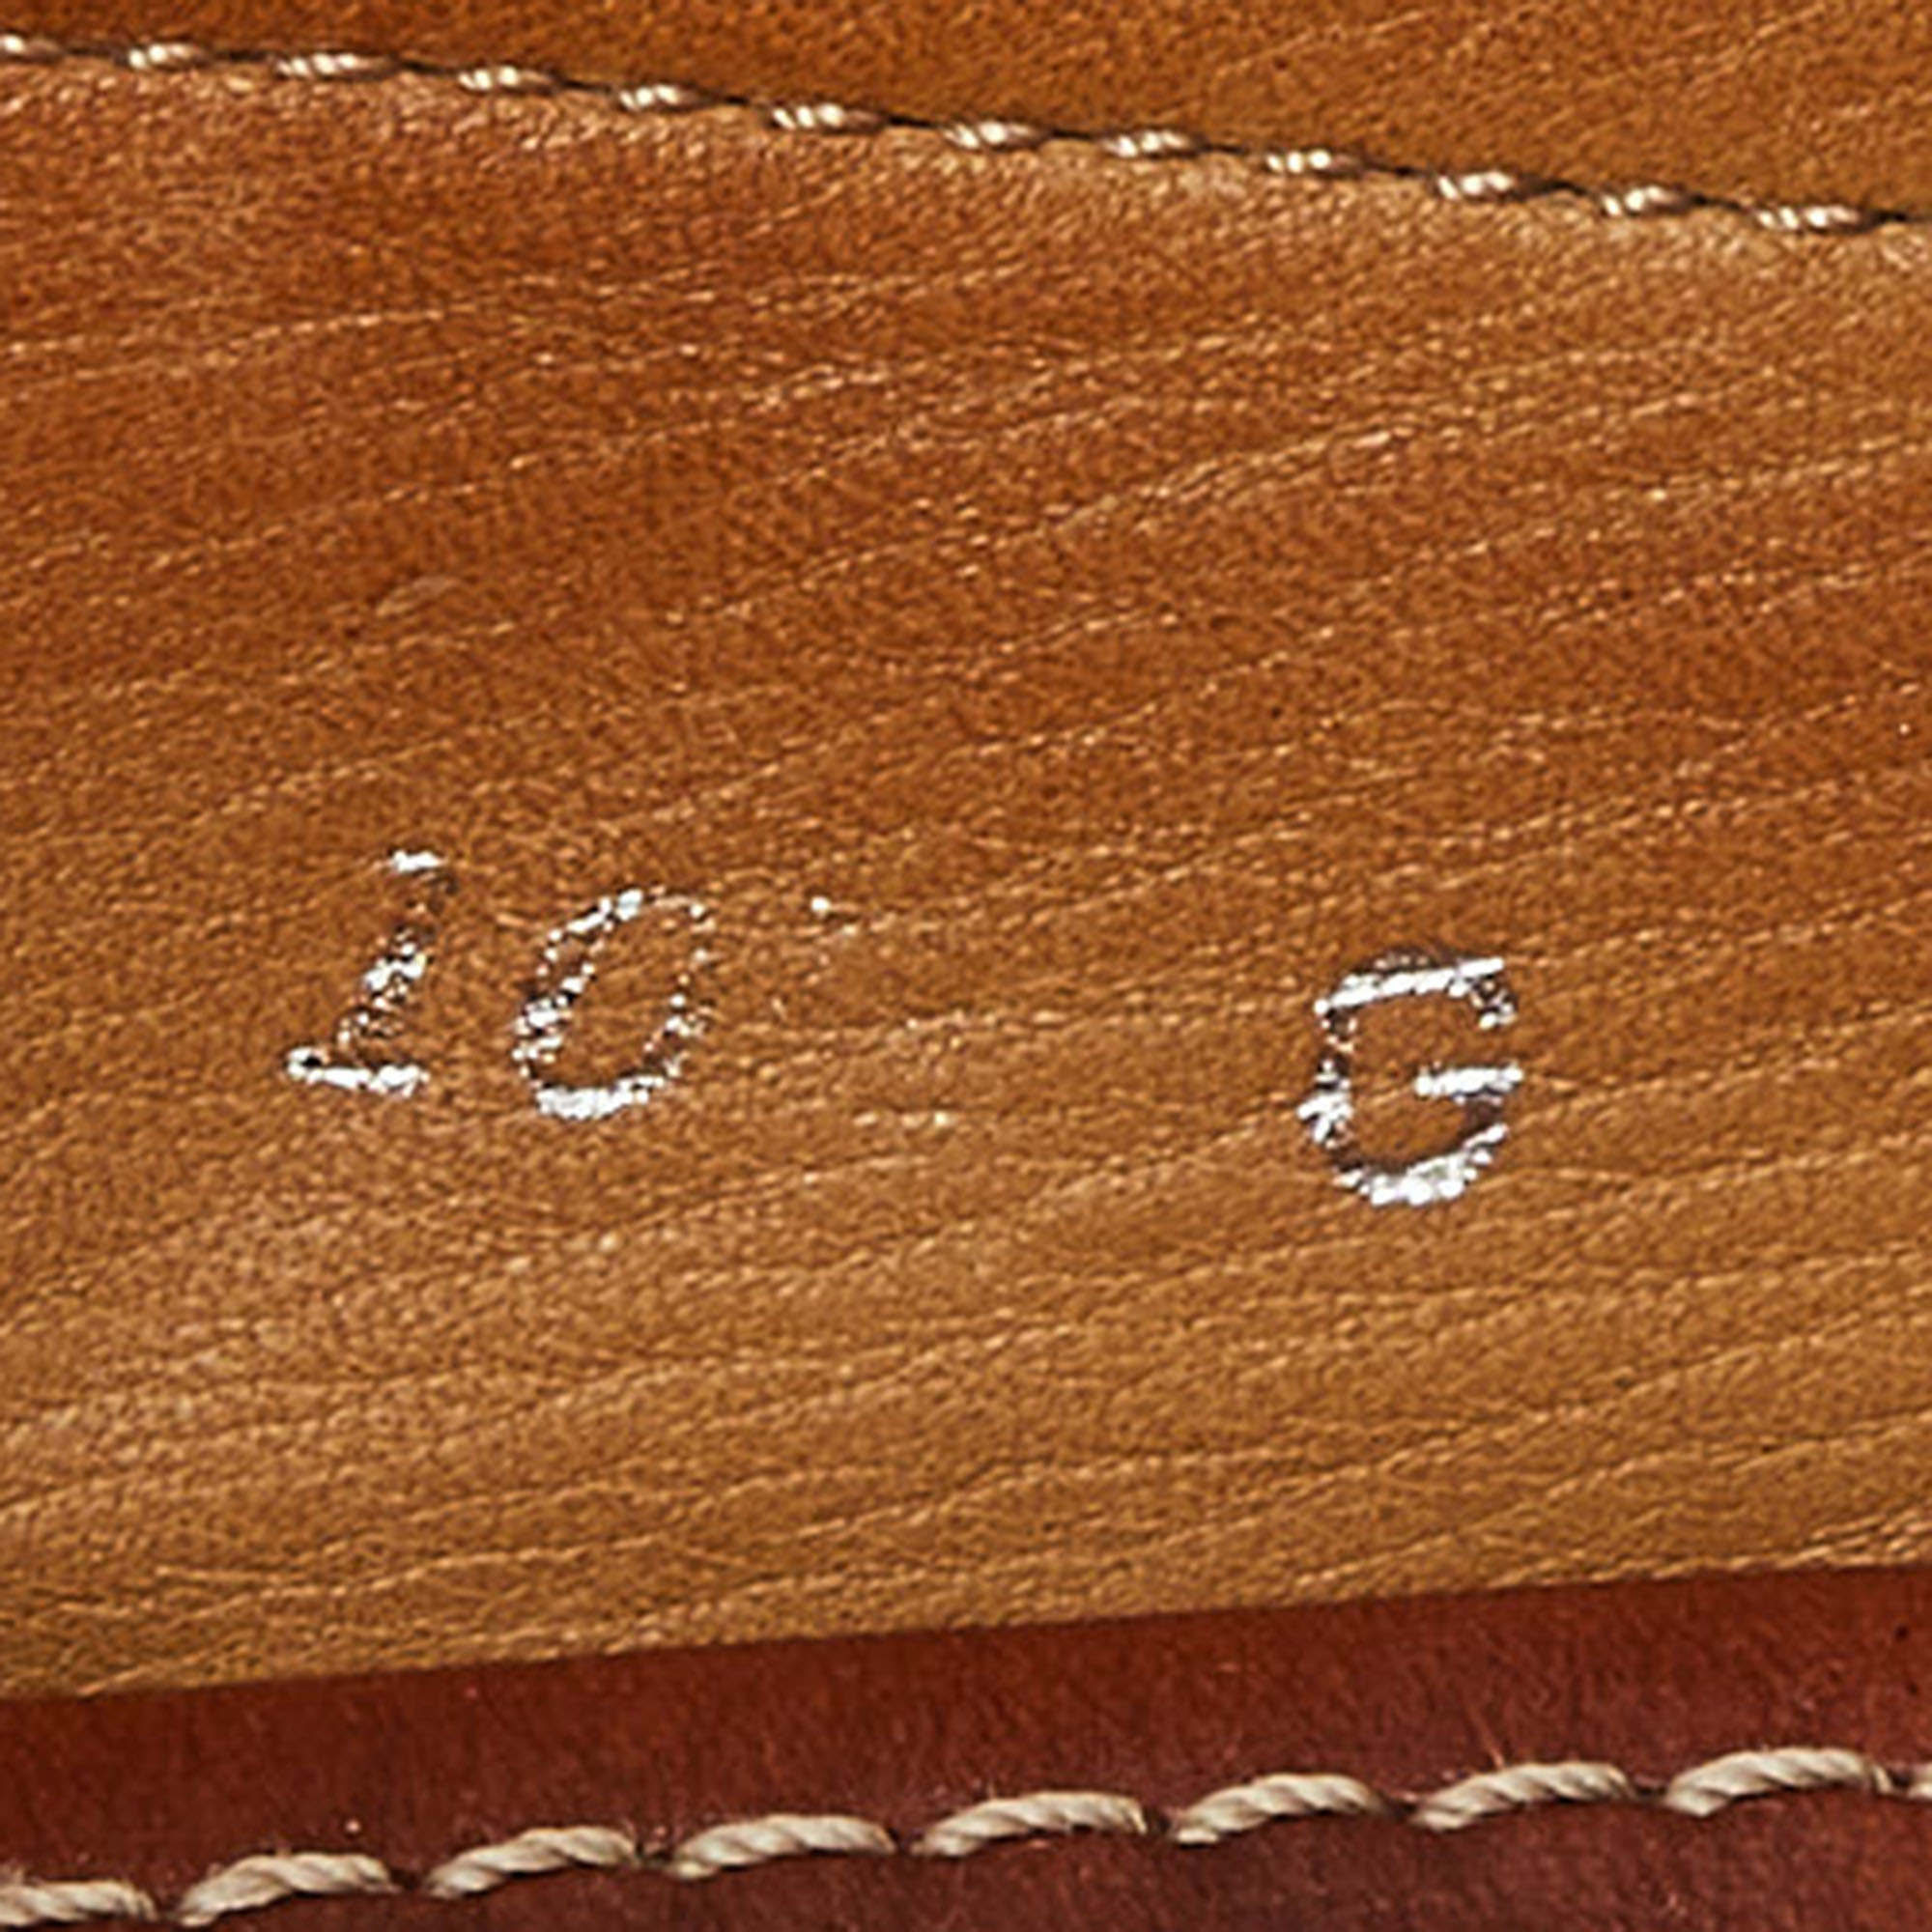 Gucci Black Leather Web Horsebit Loafers Size 44